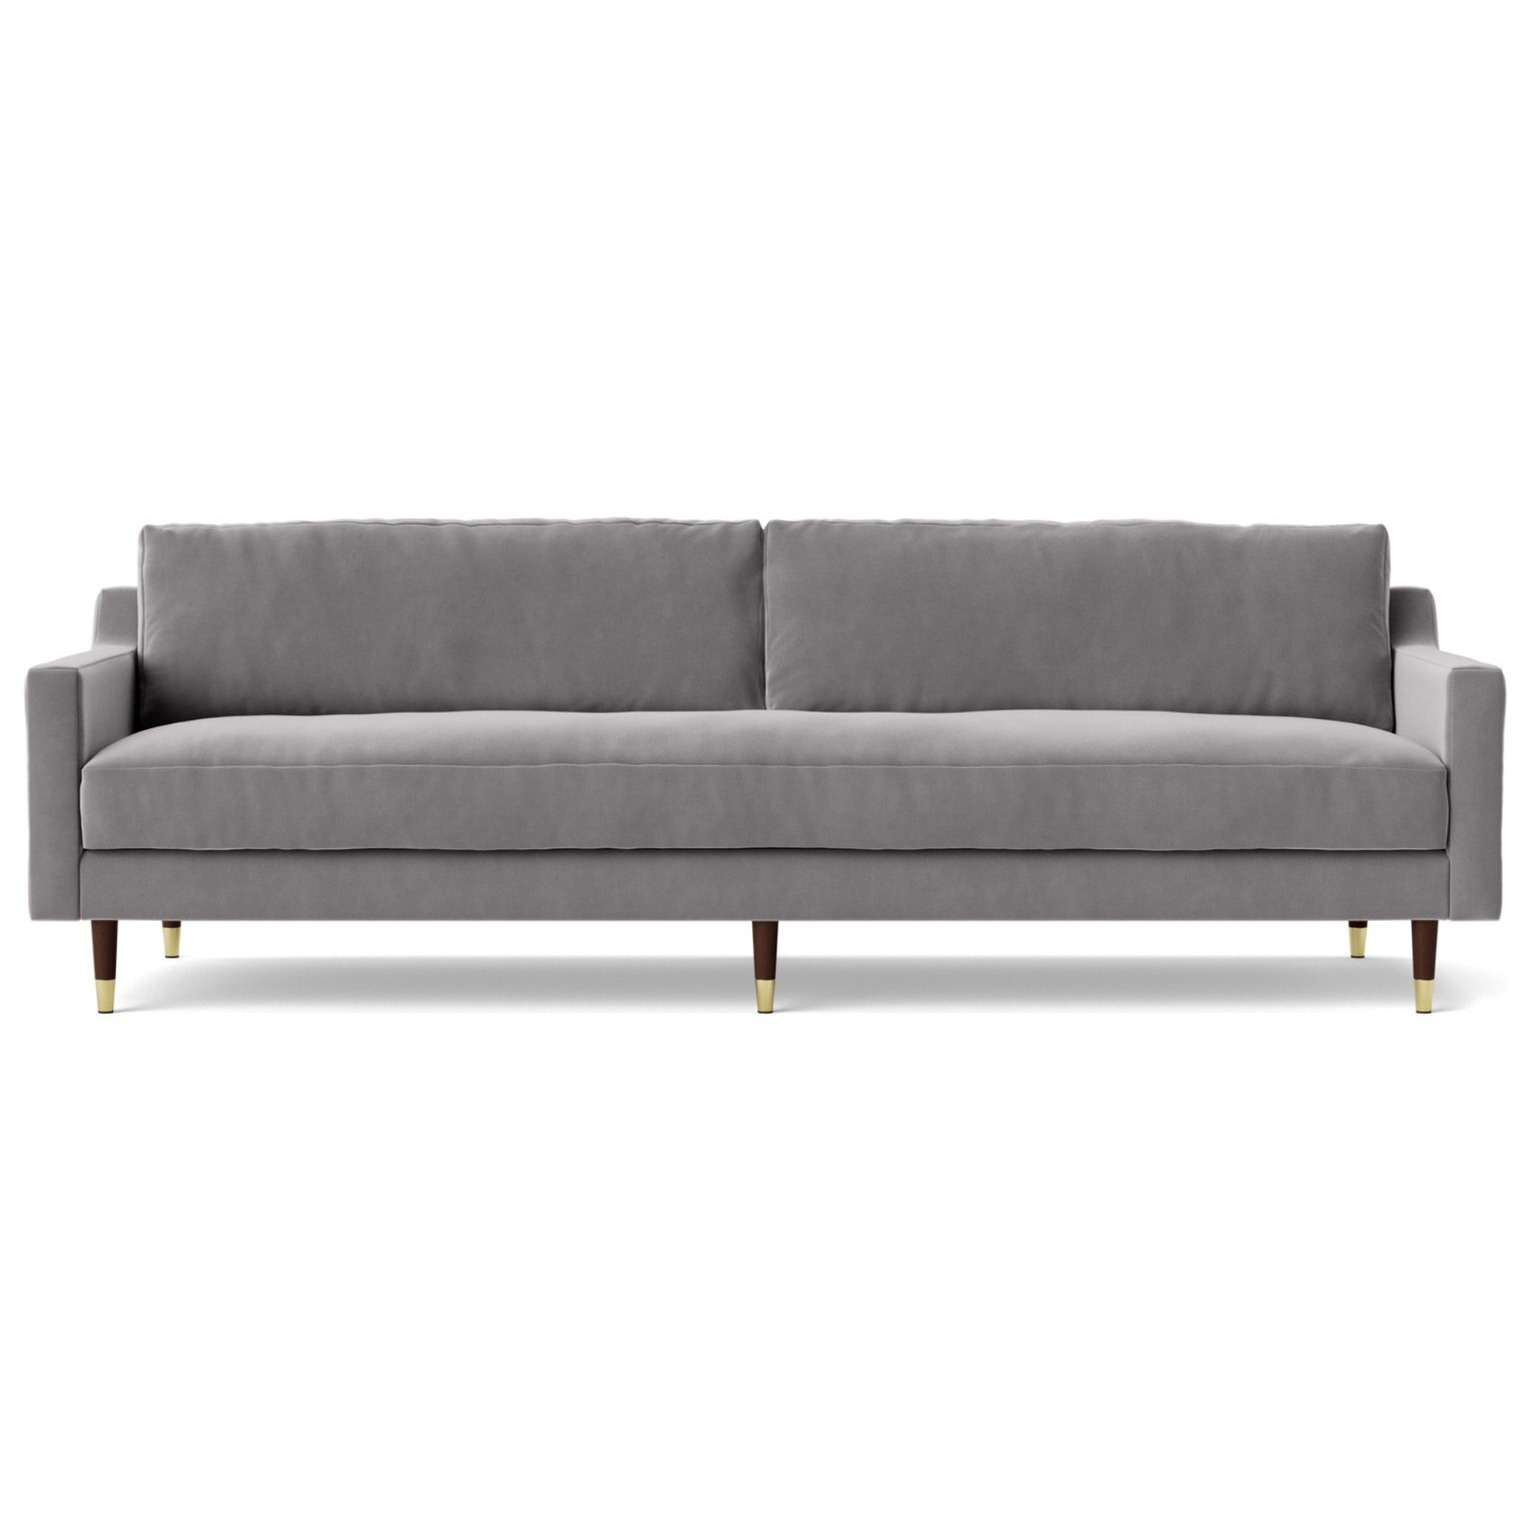 Swoon Rieti Velvet 4 Seater Sofa - Silver Grey - image 1